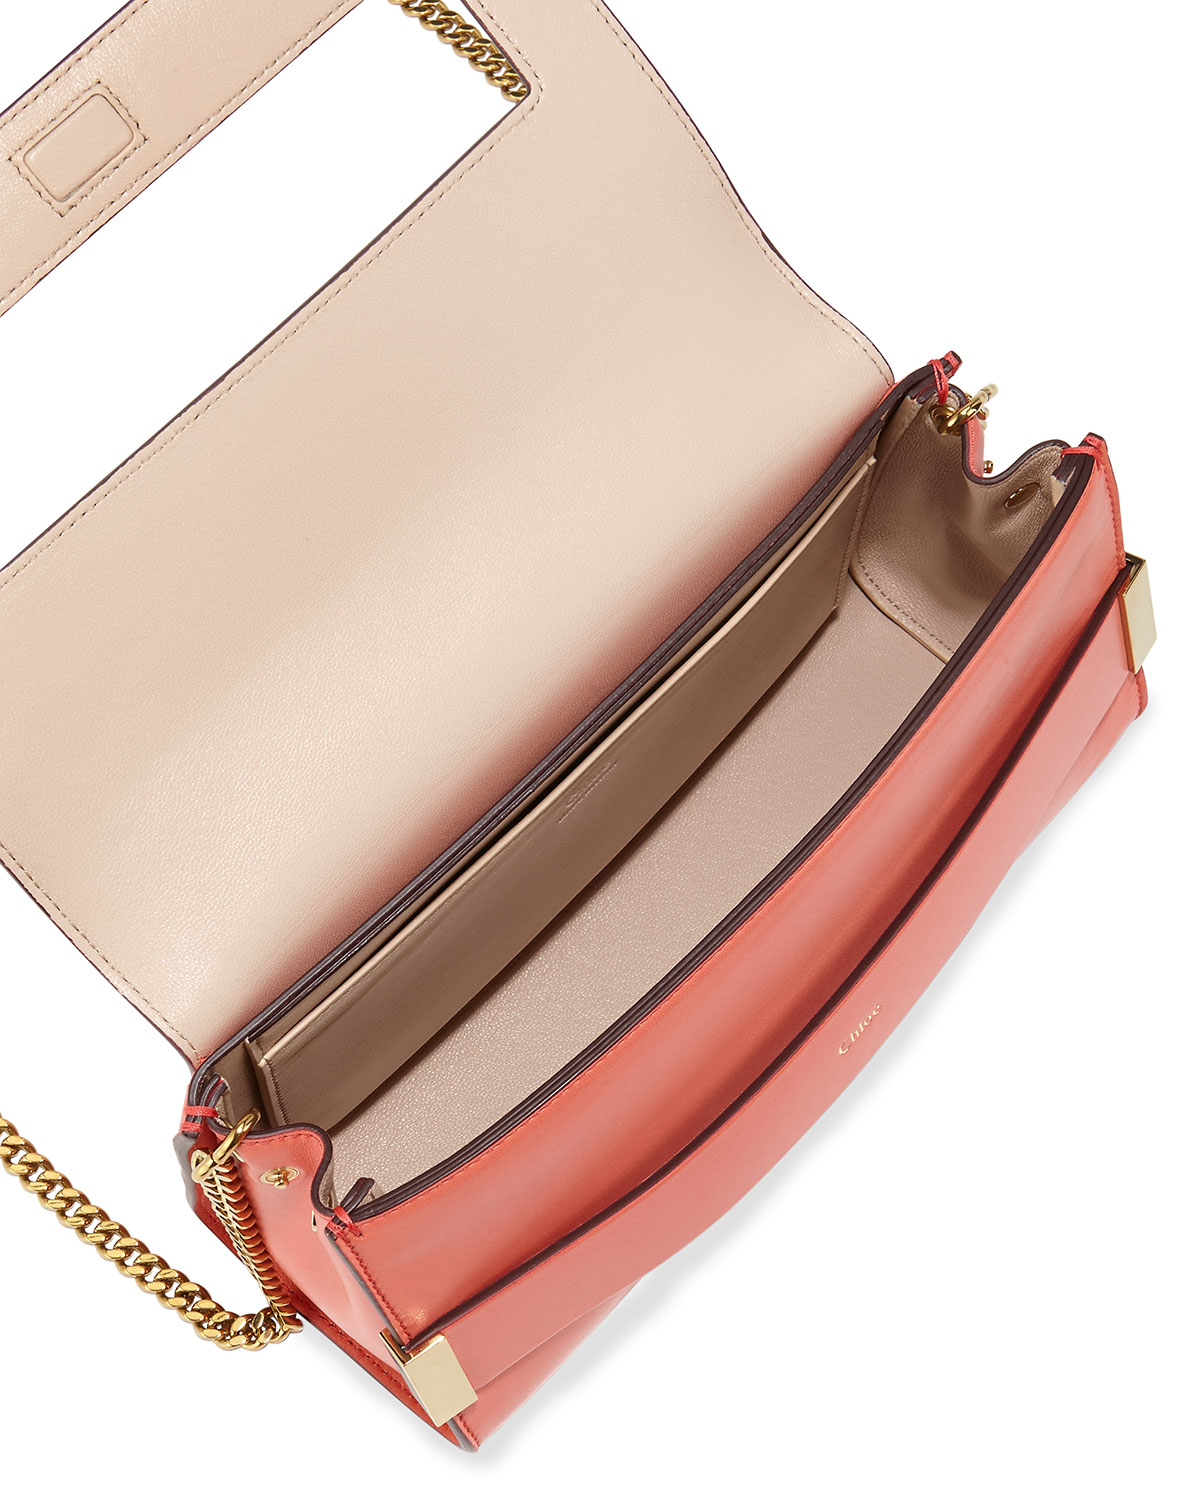 Chloé Elle Clutch Bag With Shoulder Strap in Coral (Pink) - Lyst